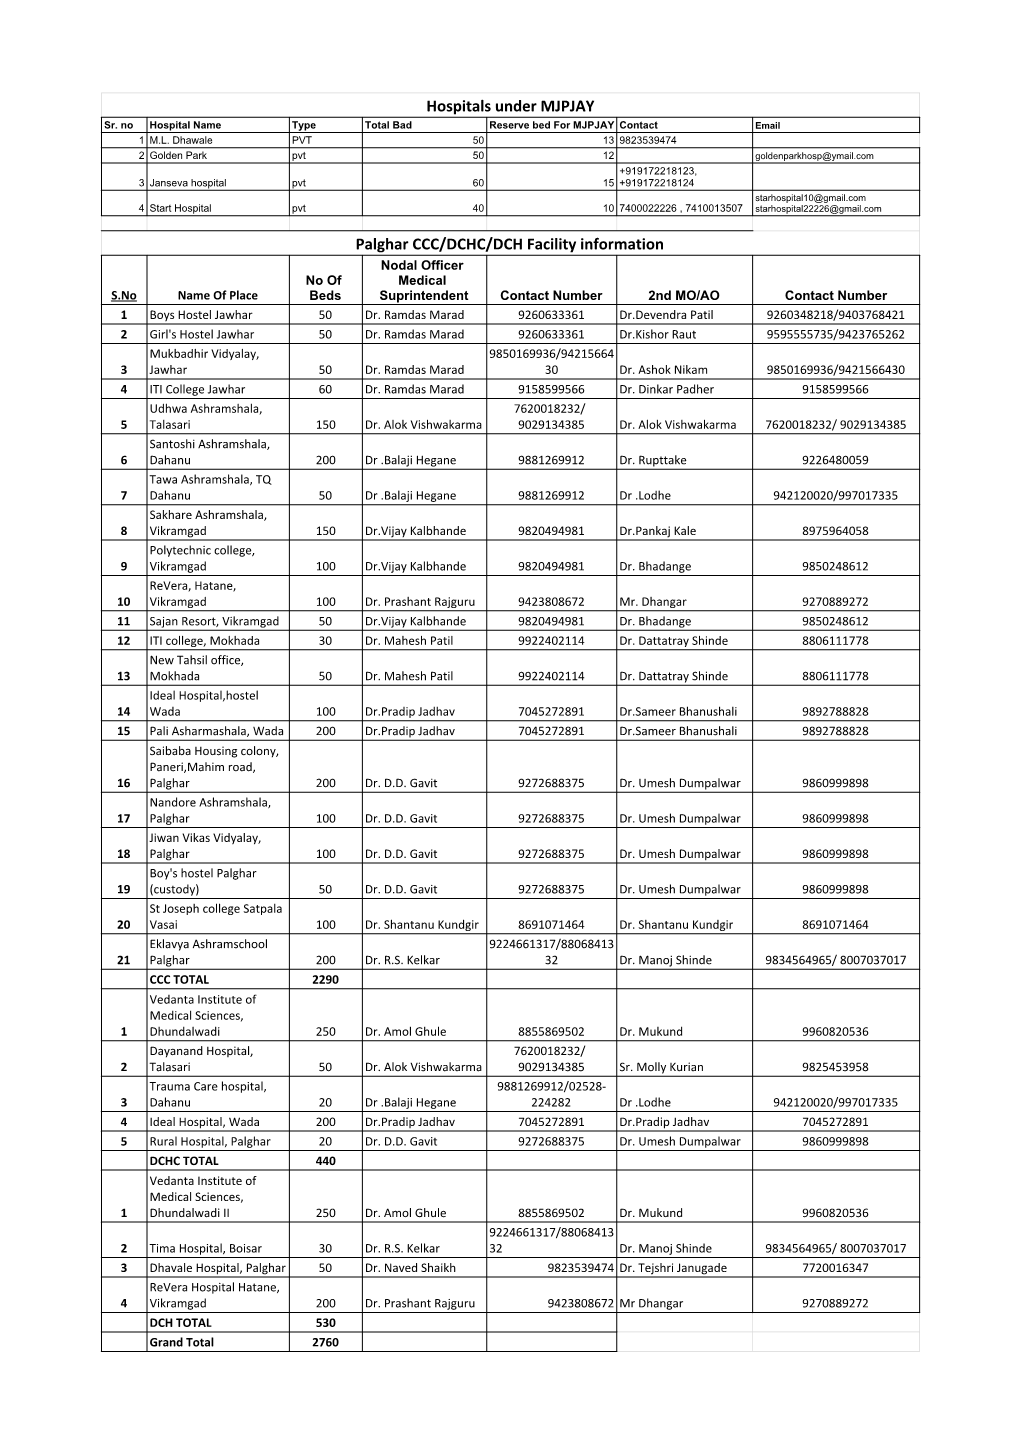 Hospitals Under MJPJAY Palghar CCC/DCHC/DCH Facility Information